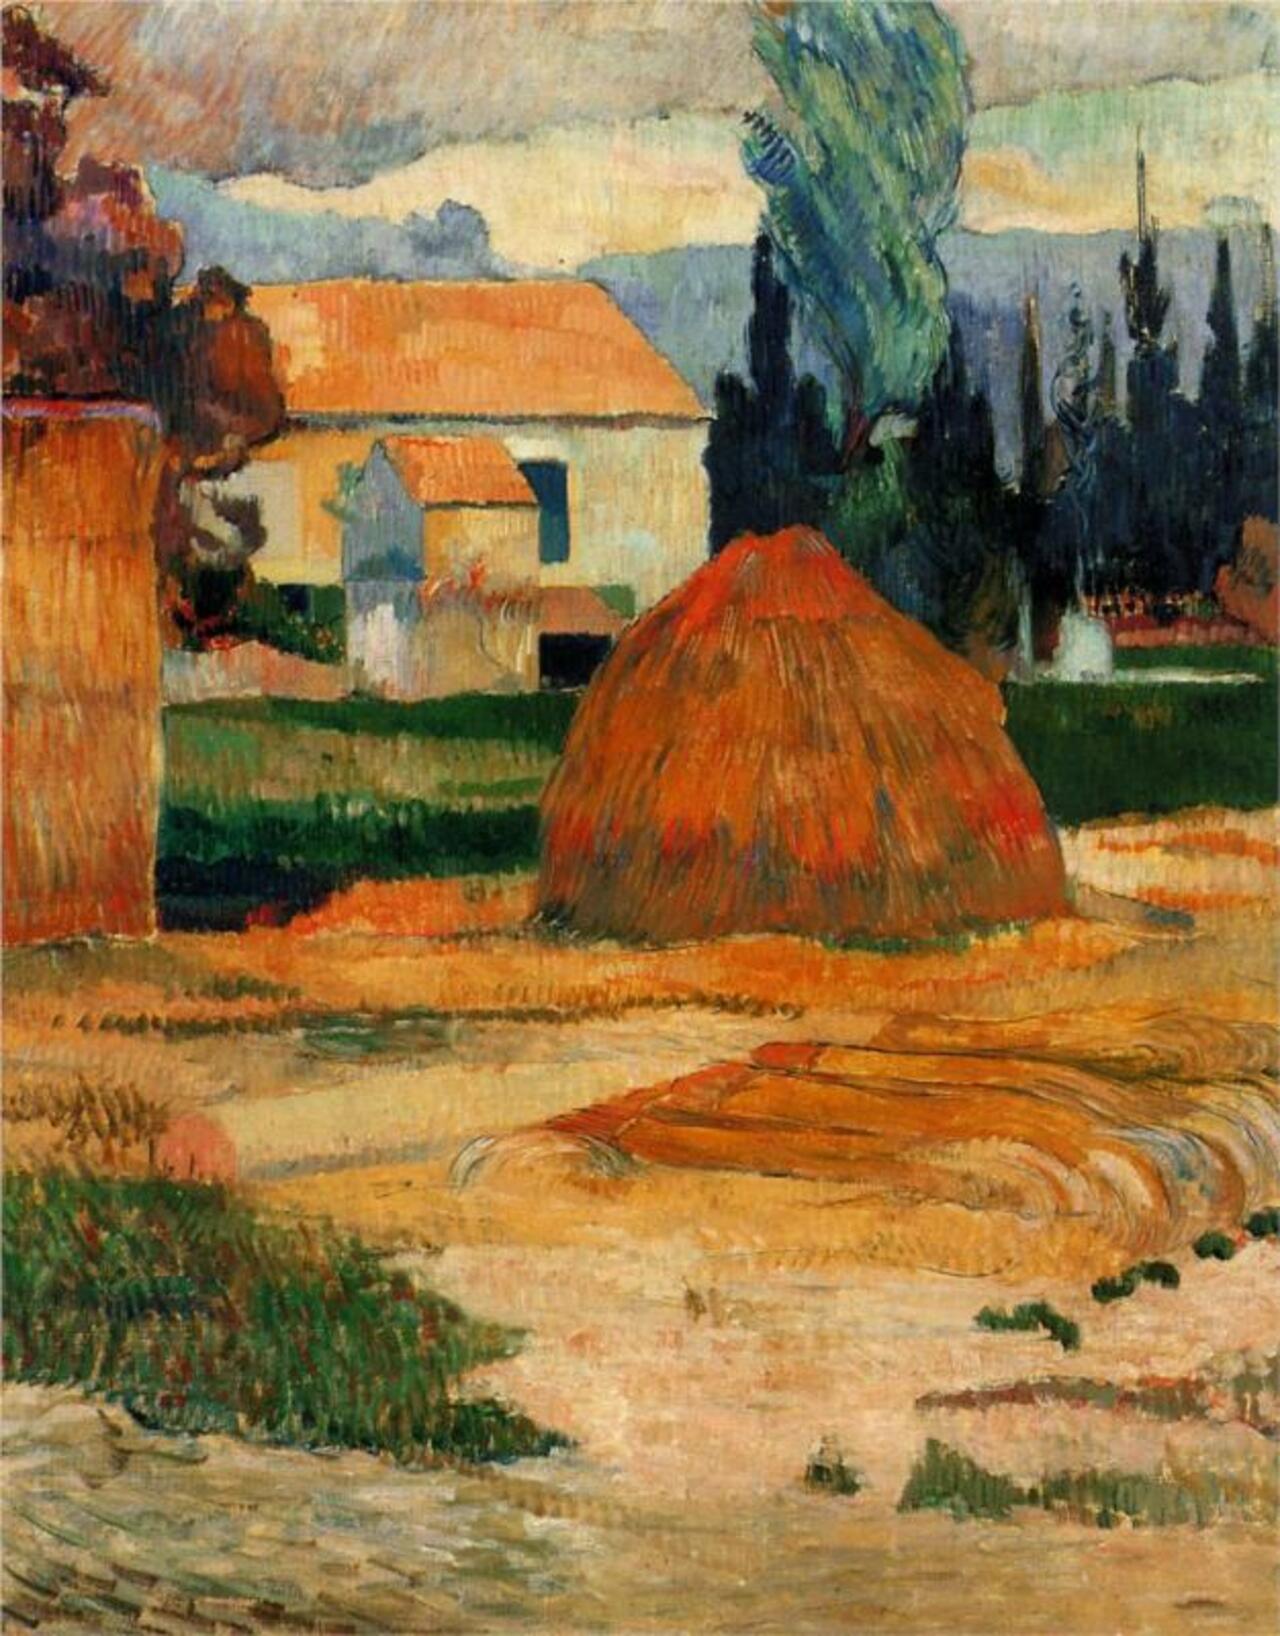 RT @avadesordre: #ArtePerLArte #natioggi #Gauguin Landscape near Arles
@PatriziaRametta @artdielle @elvisprendushi @MP27_ @caro_viola http://t.co/8Bk2HdO57b